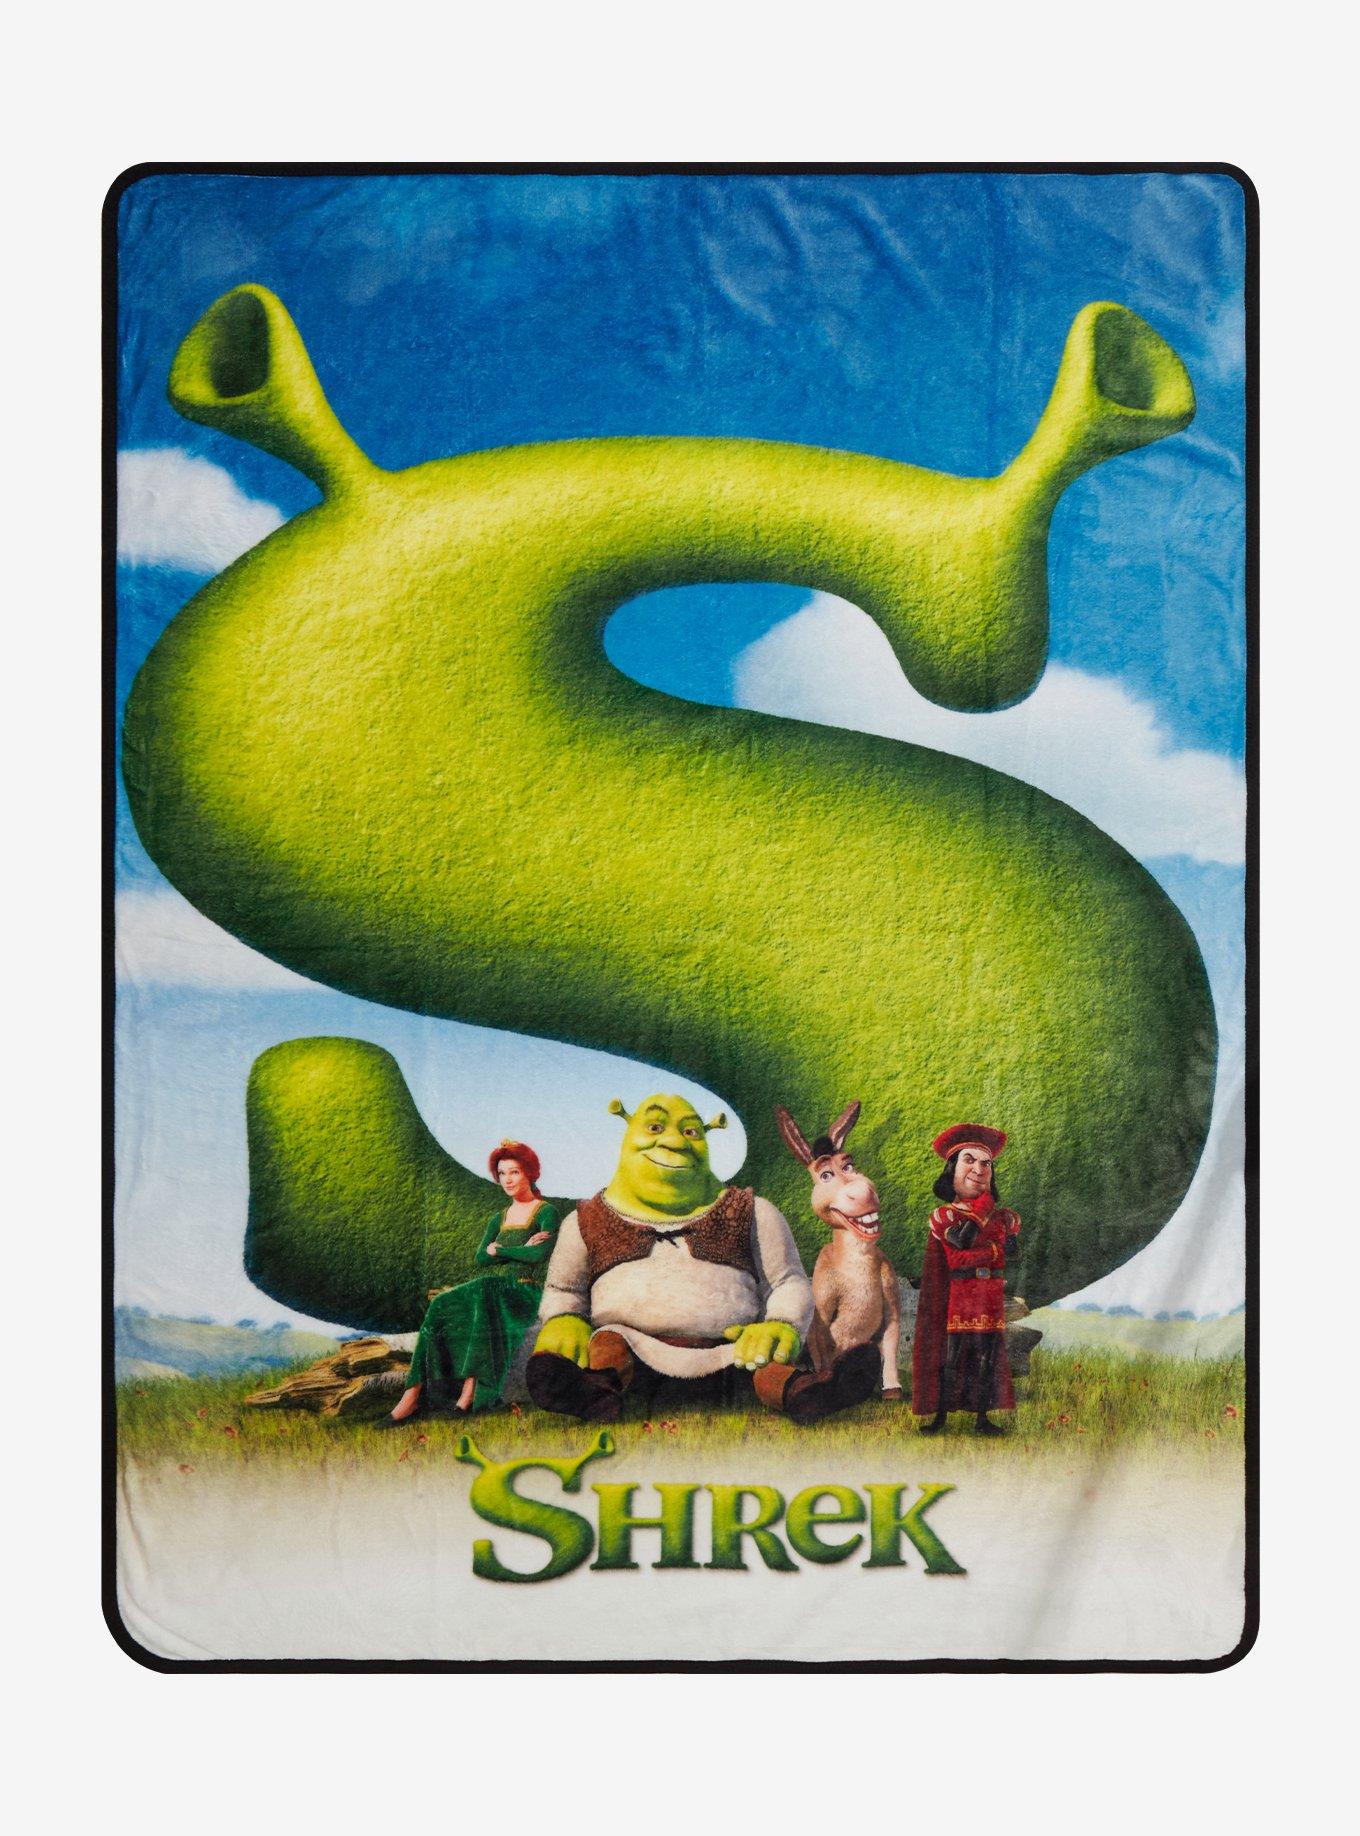 Pin en Shrek movie night